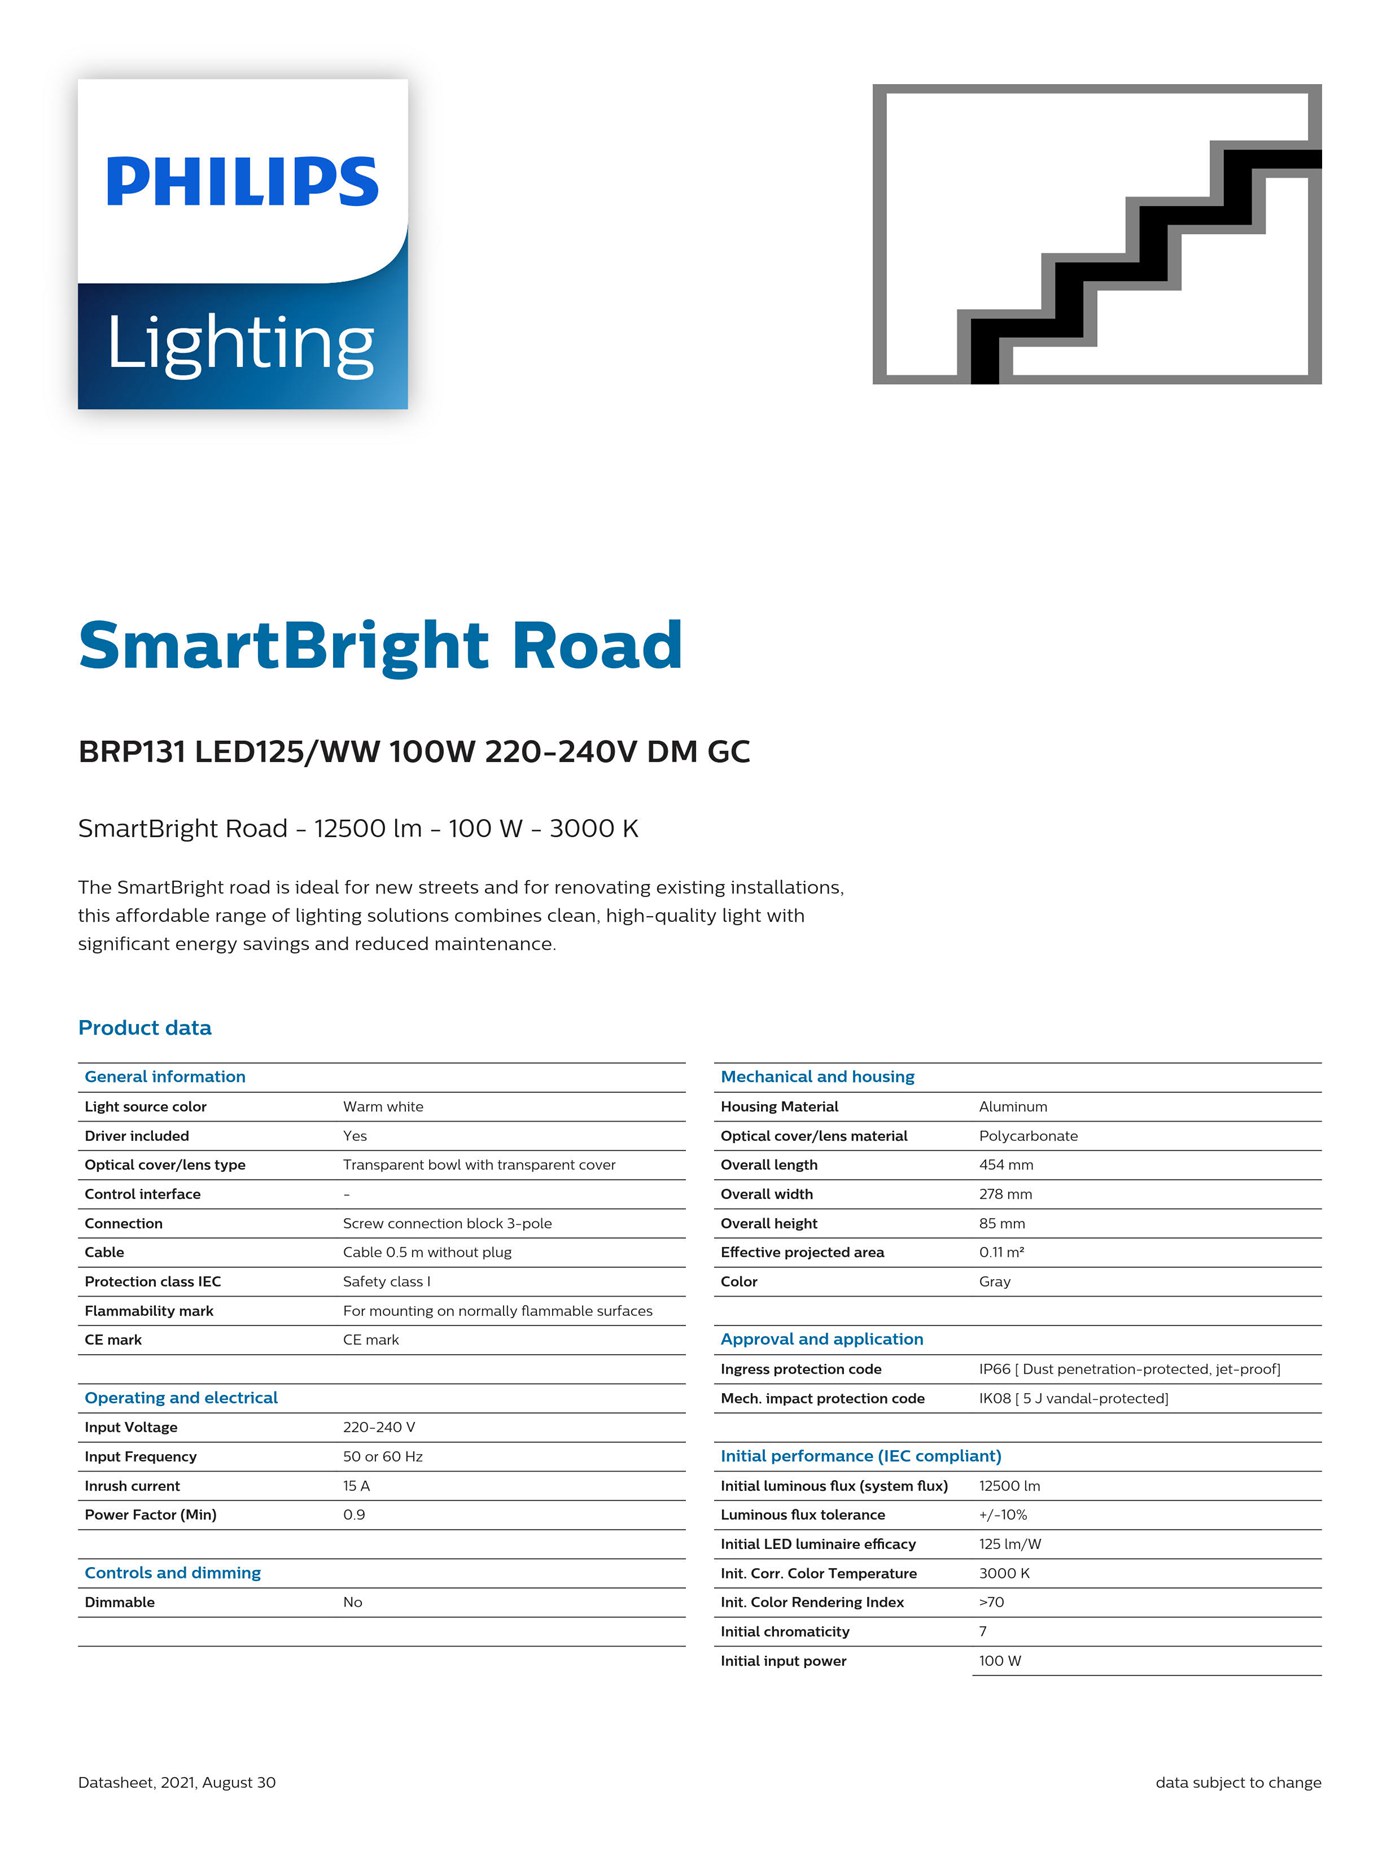 PHILIPS SmartBright Road BRP131 LED125/WW 100W 220-240V DM GC 911401675307